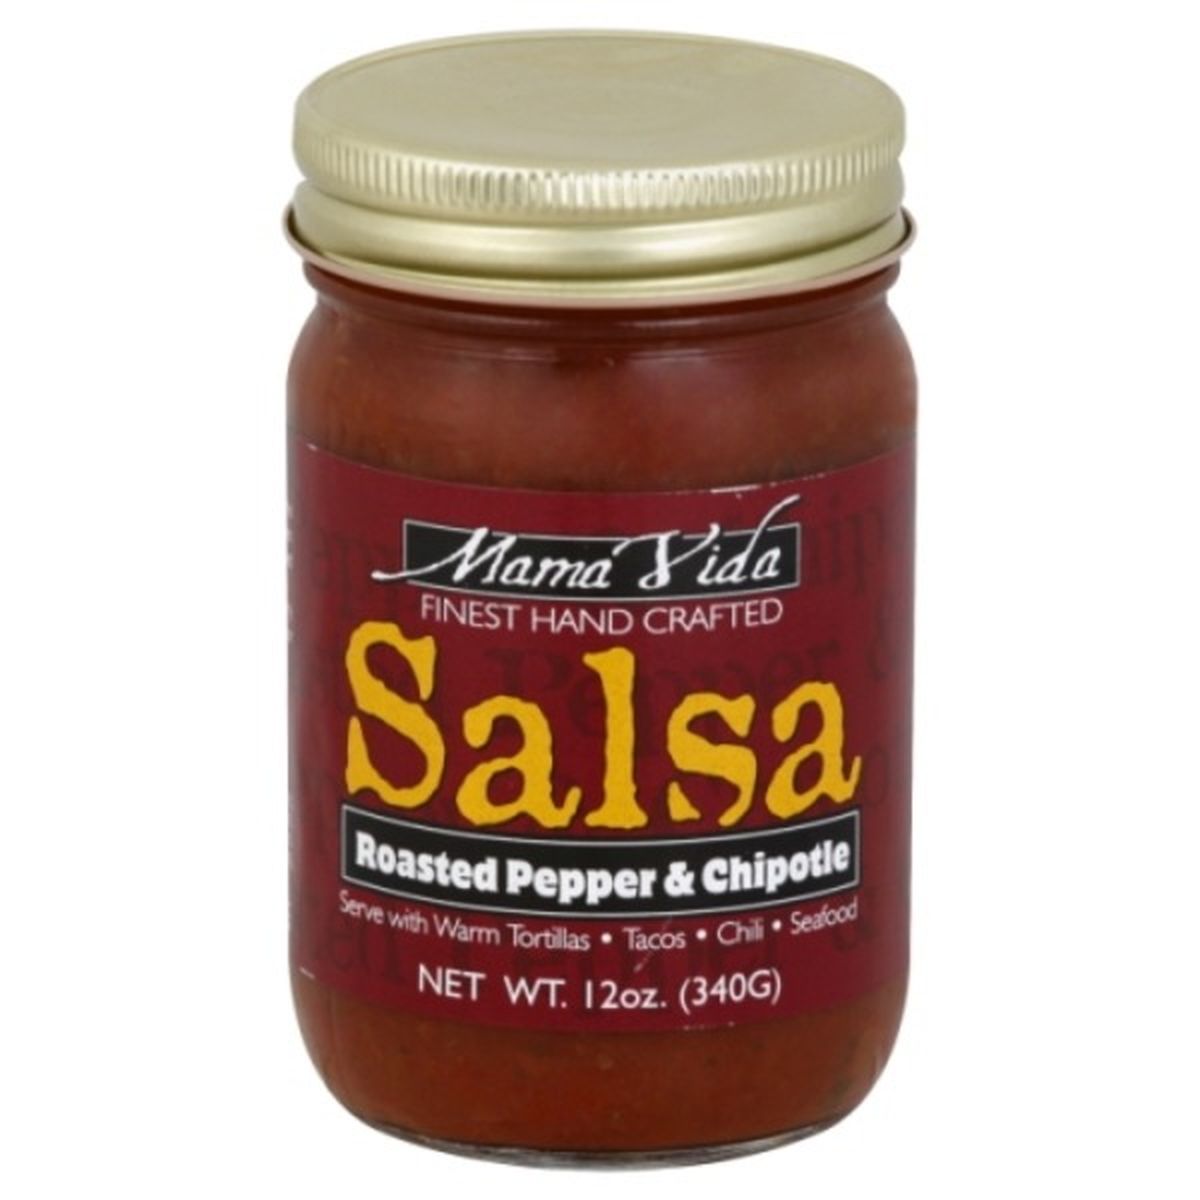 Calories in Mama Vida Salsa, Roasted Pepper & Chipotle